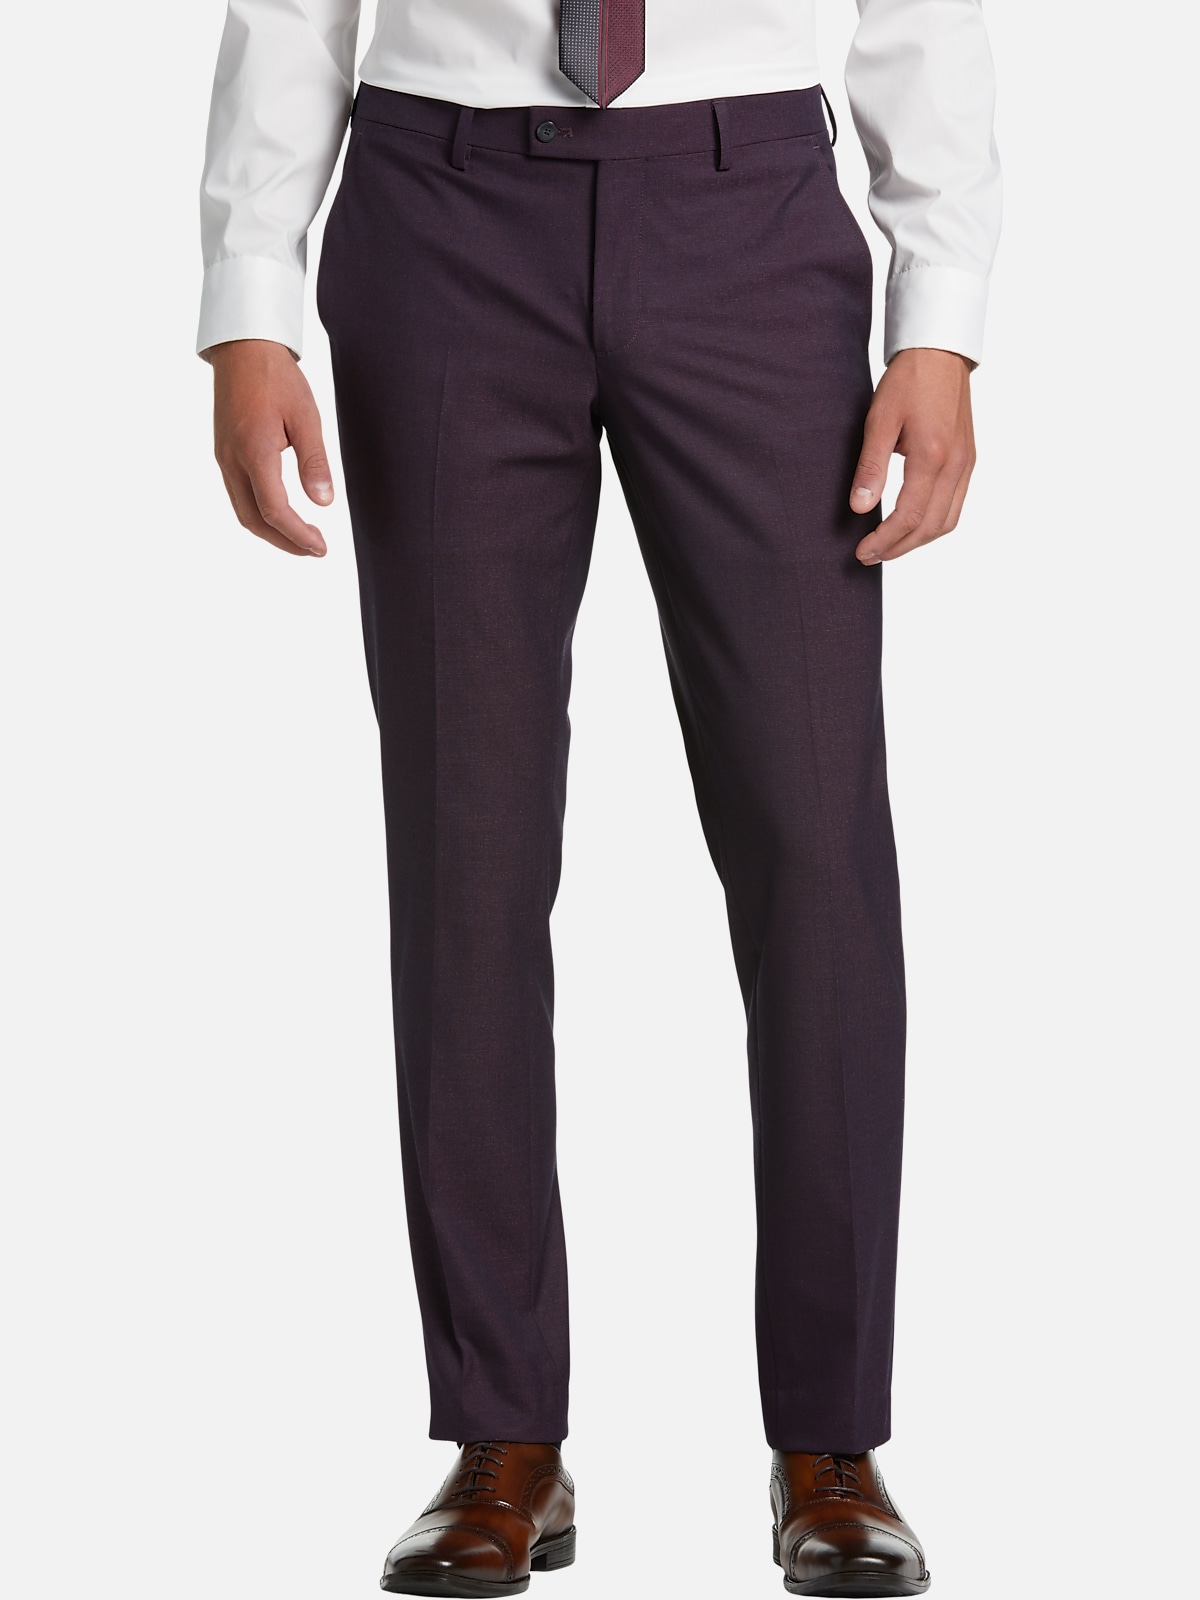 Egara Skinny Fit Suit Separates Pants | All Clearance $39.99| Men's ...